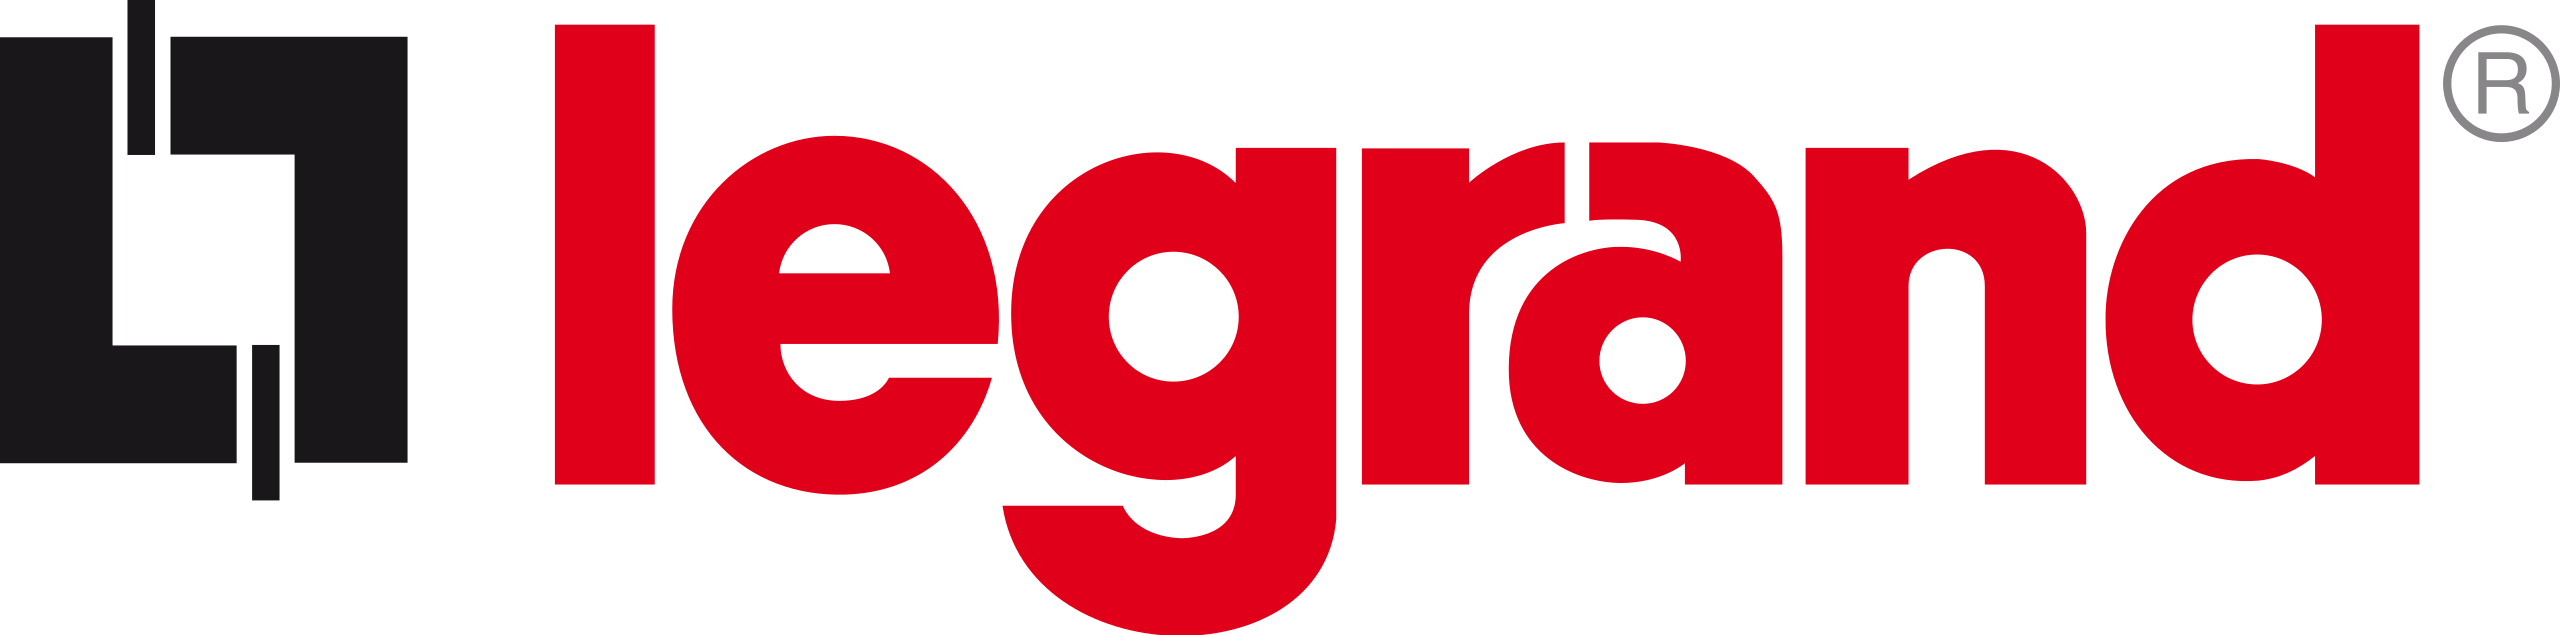 The Legrand logo